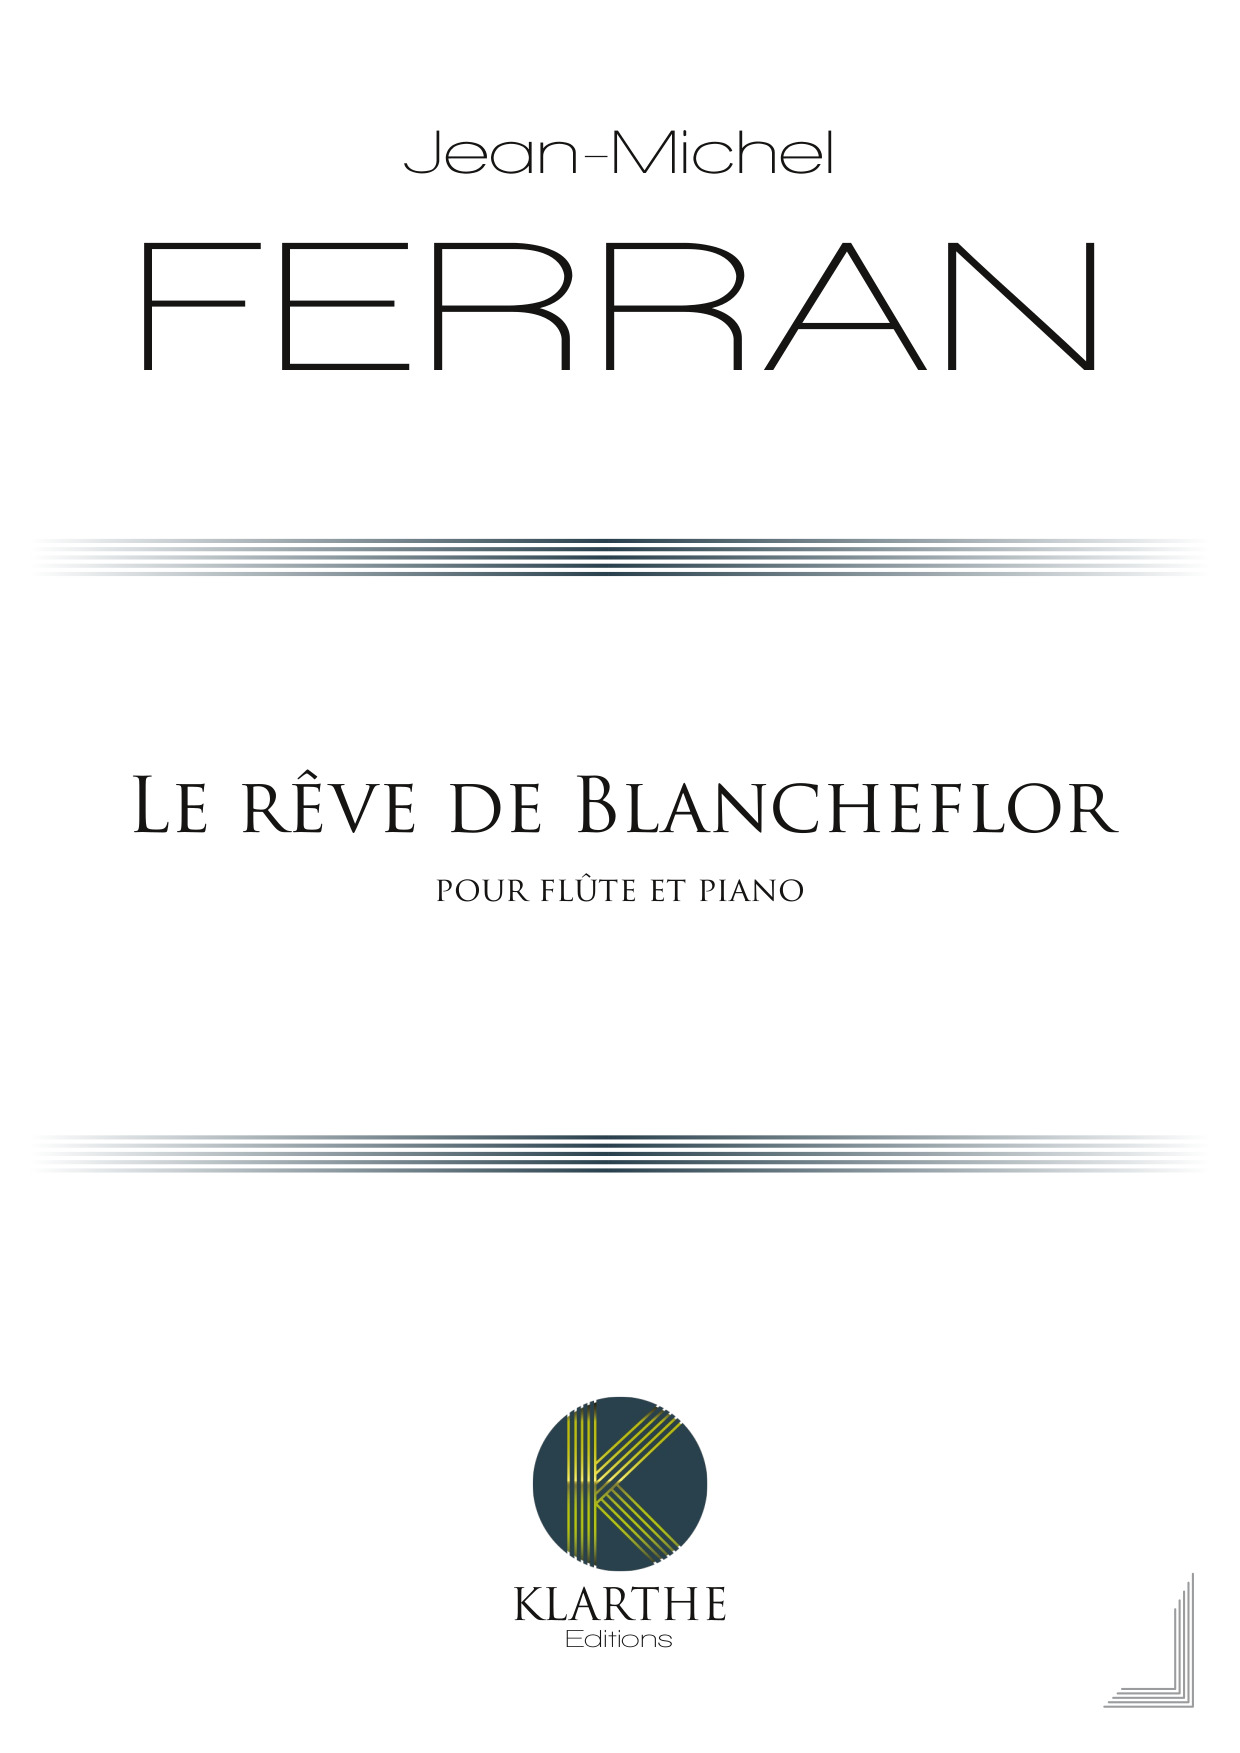 Le rve de Blancheflor (FERRAN JEAN-MICHEL)